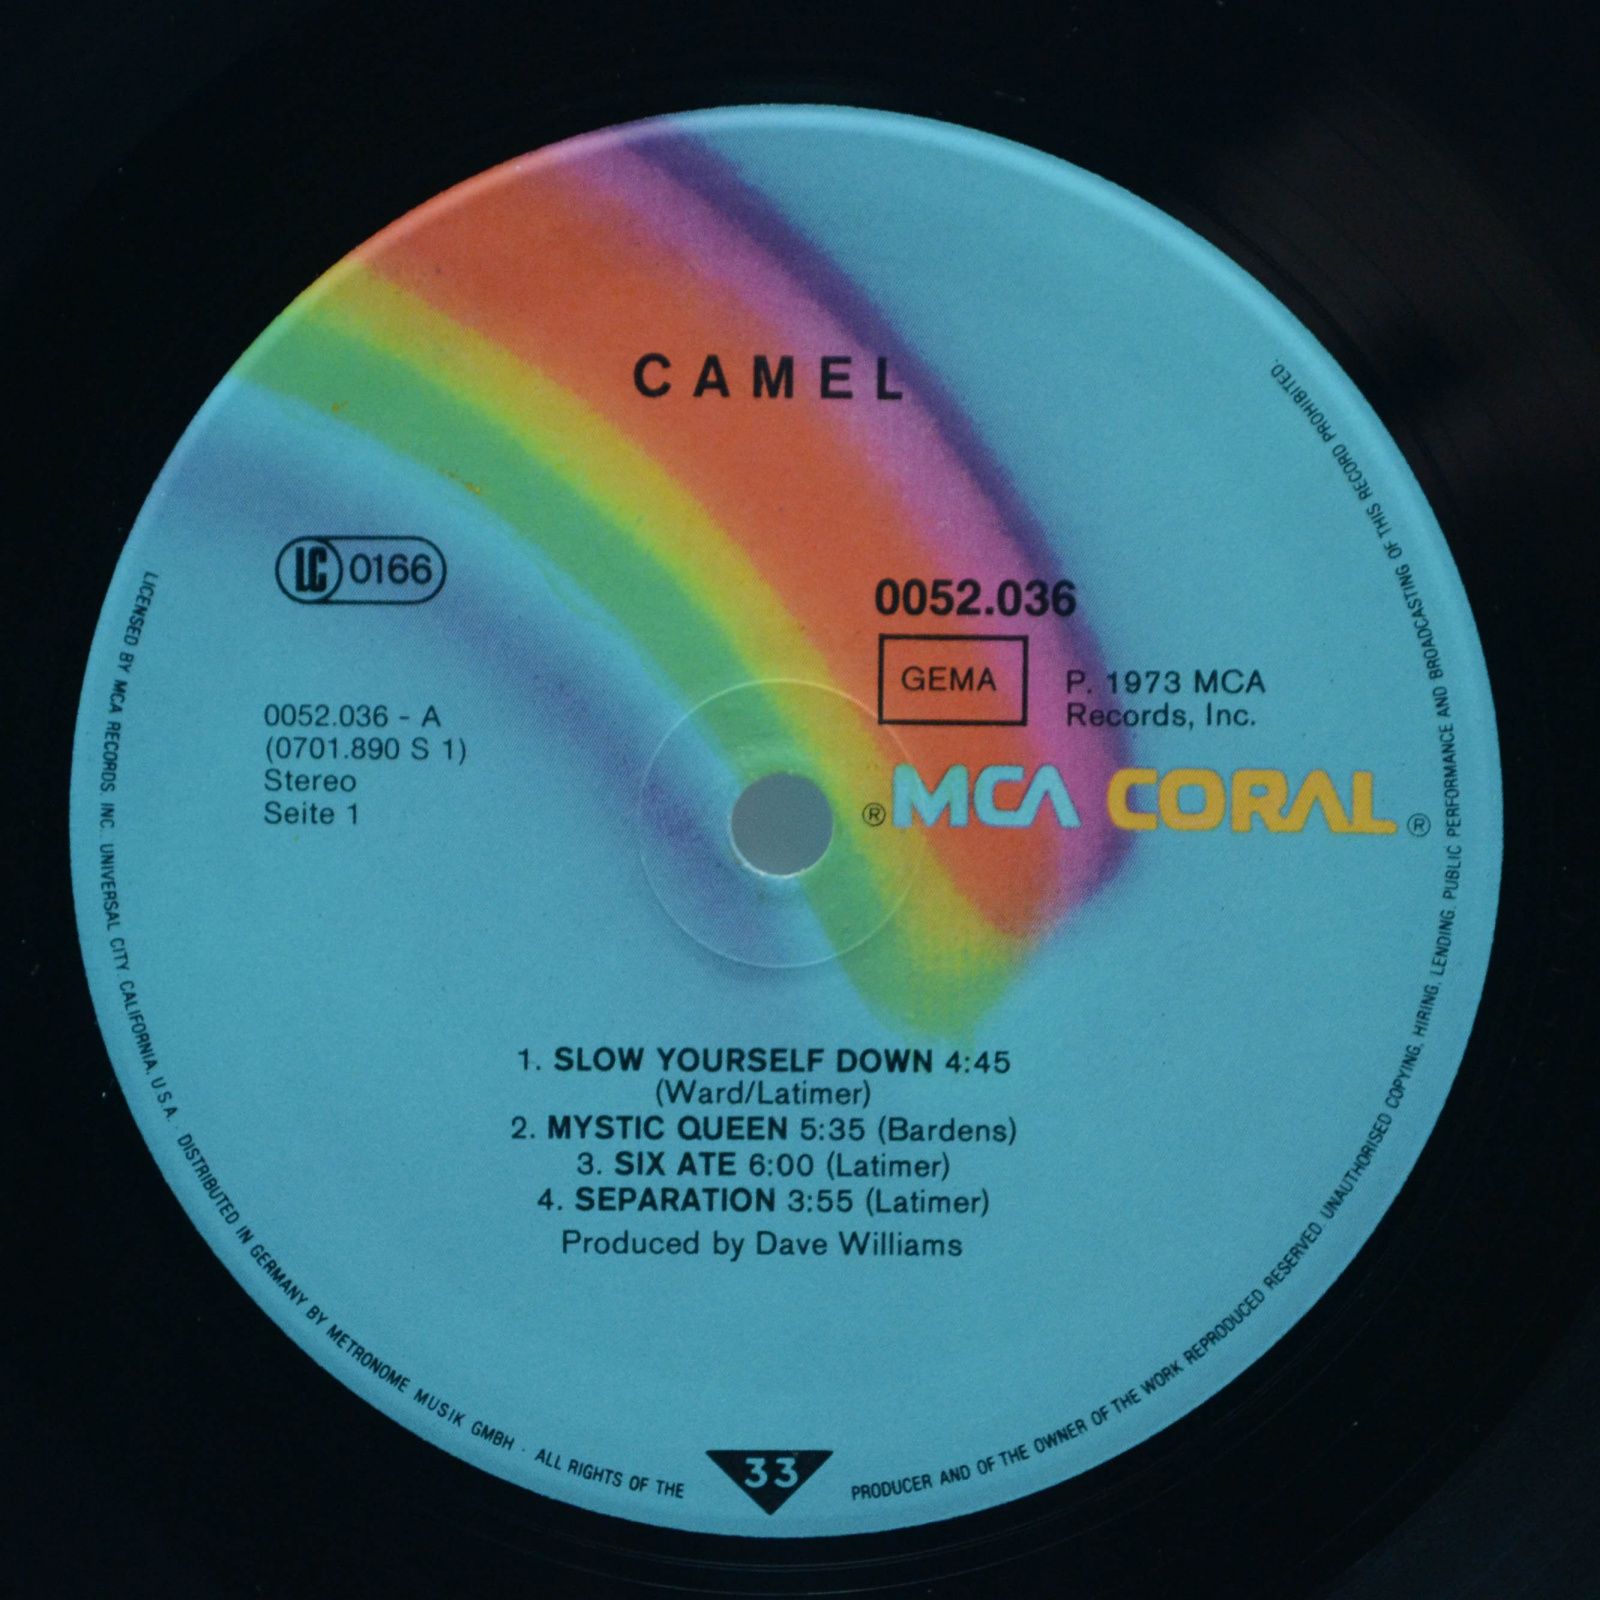 Camel — Camel, 1973